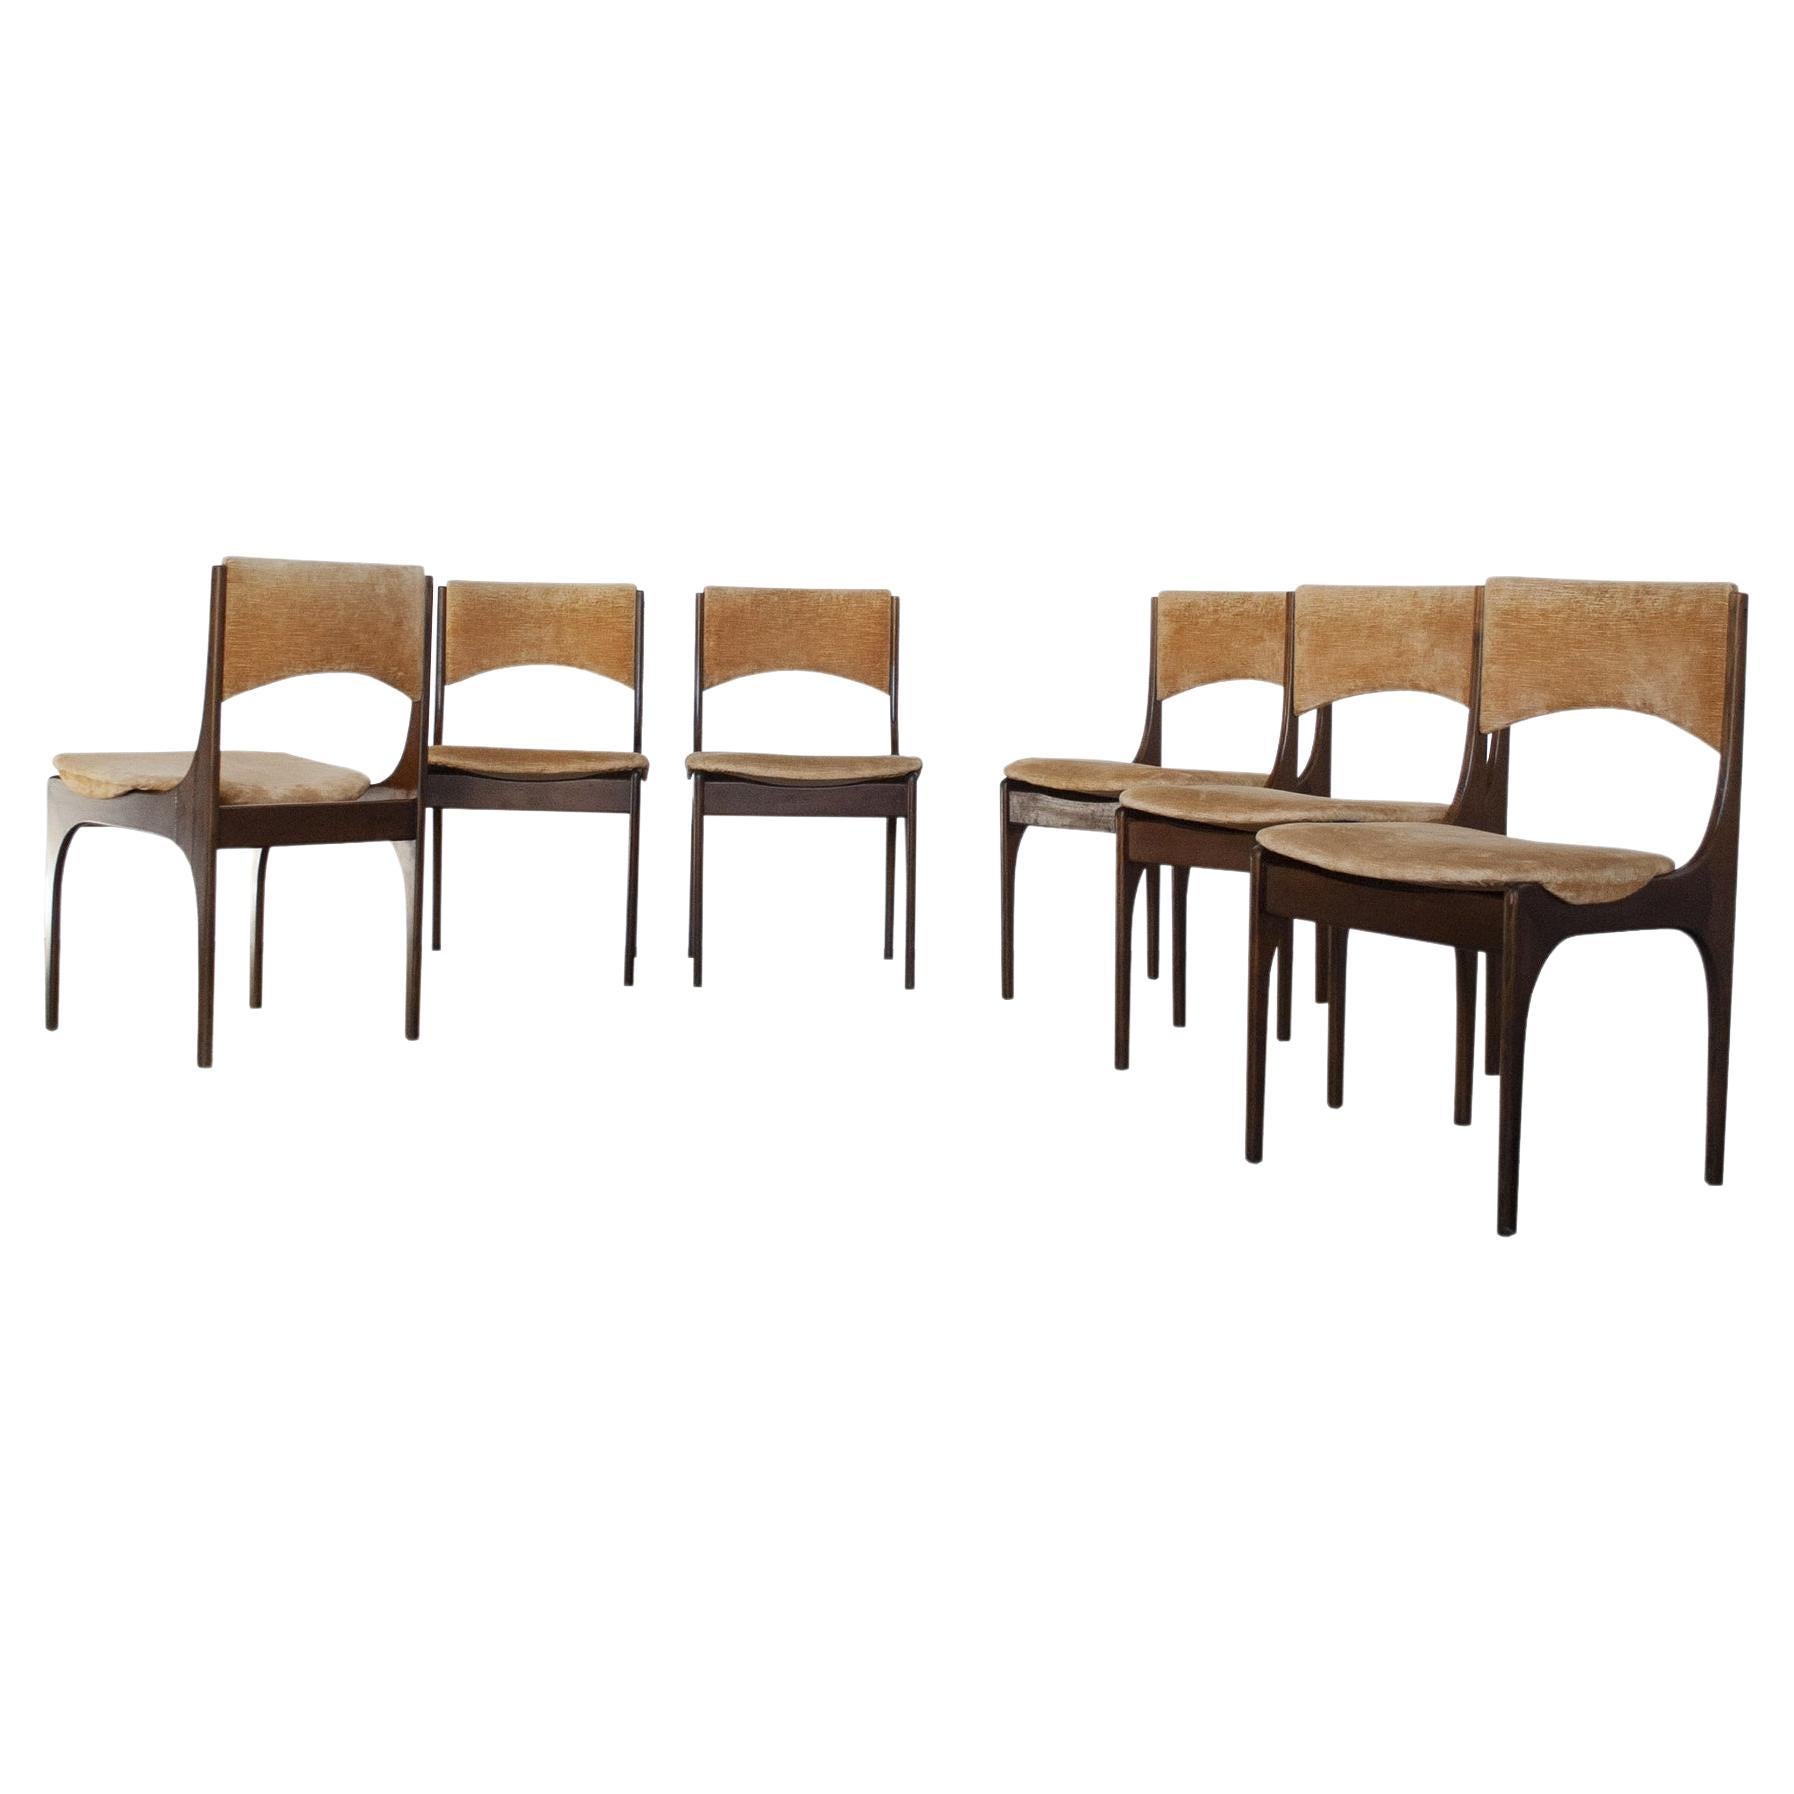 Giuseppe Gibelli Italian Midcentury Chairs from 60's